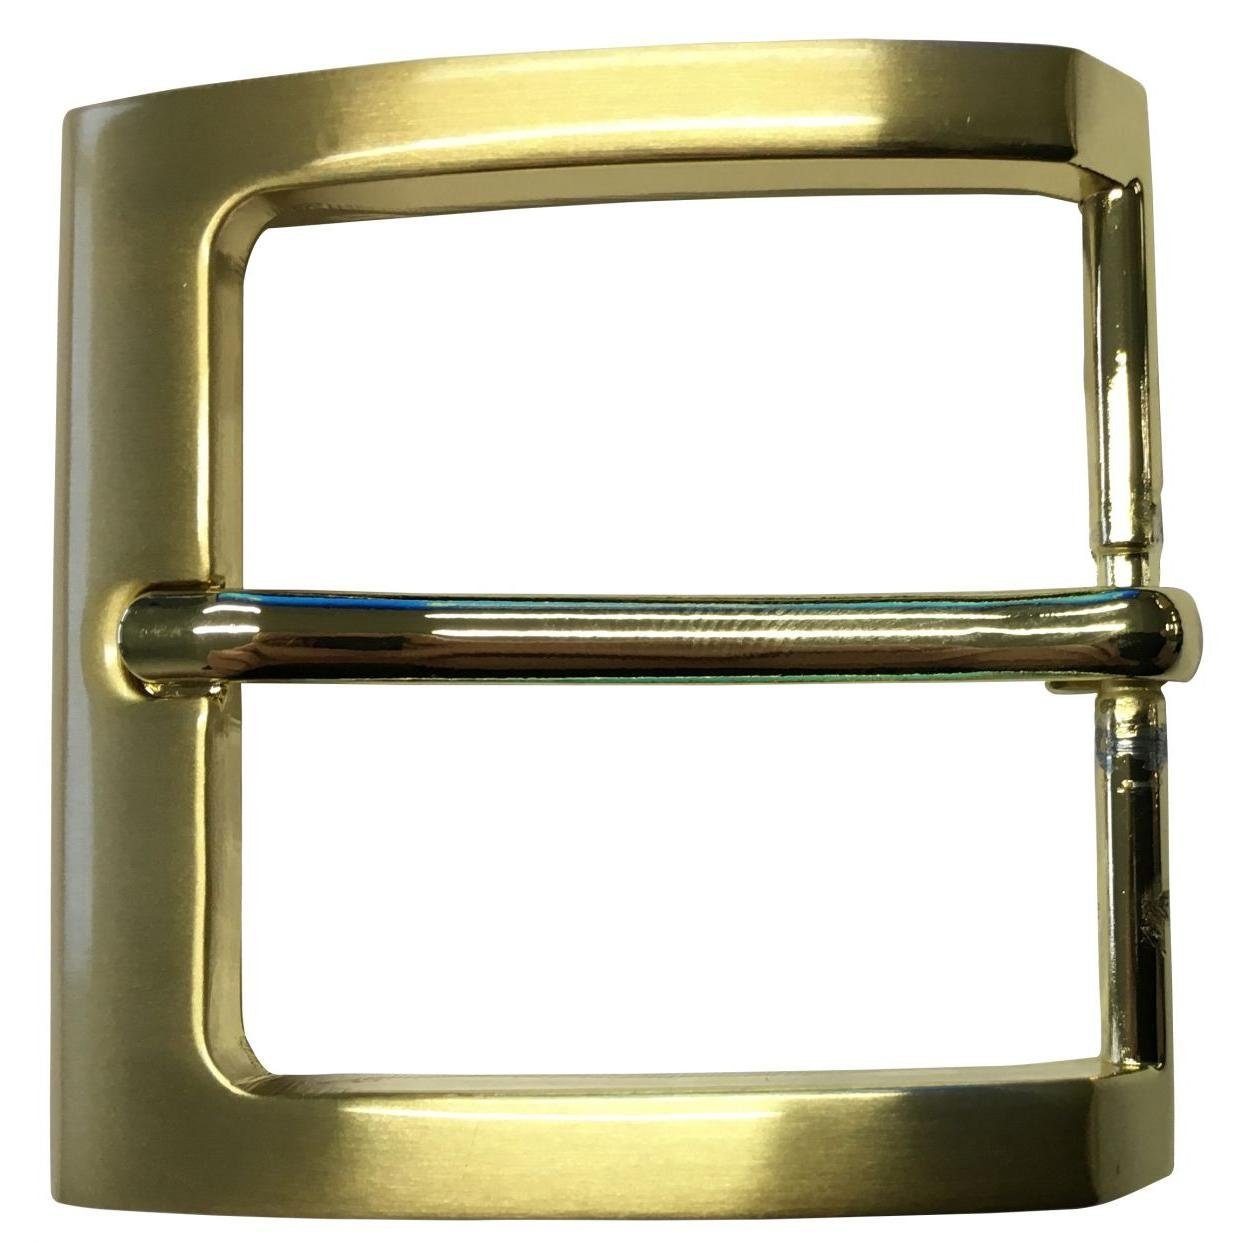 BELTINGER Gürtelschnalle Wechselschließe - 40mm 4,0 cm Matt Gold, Dorn-Schließe - Gürtel - Gürtelschließe